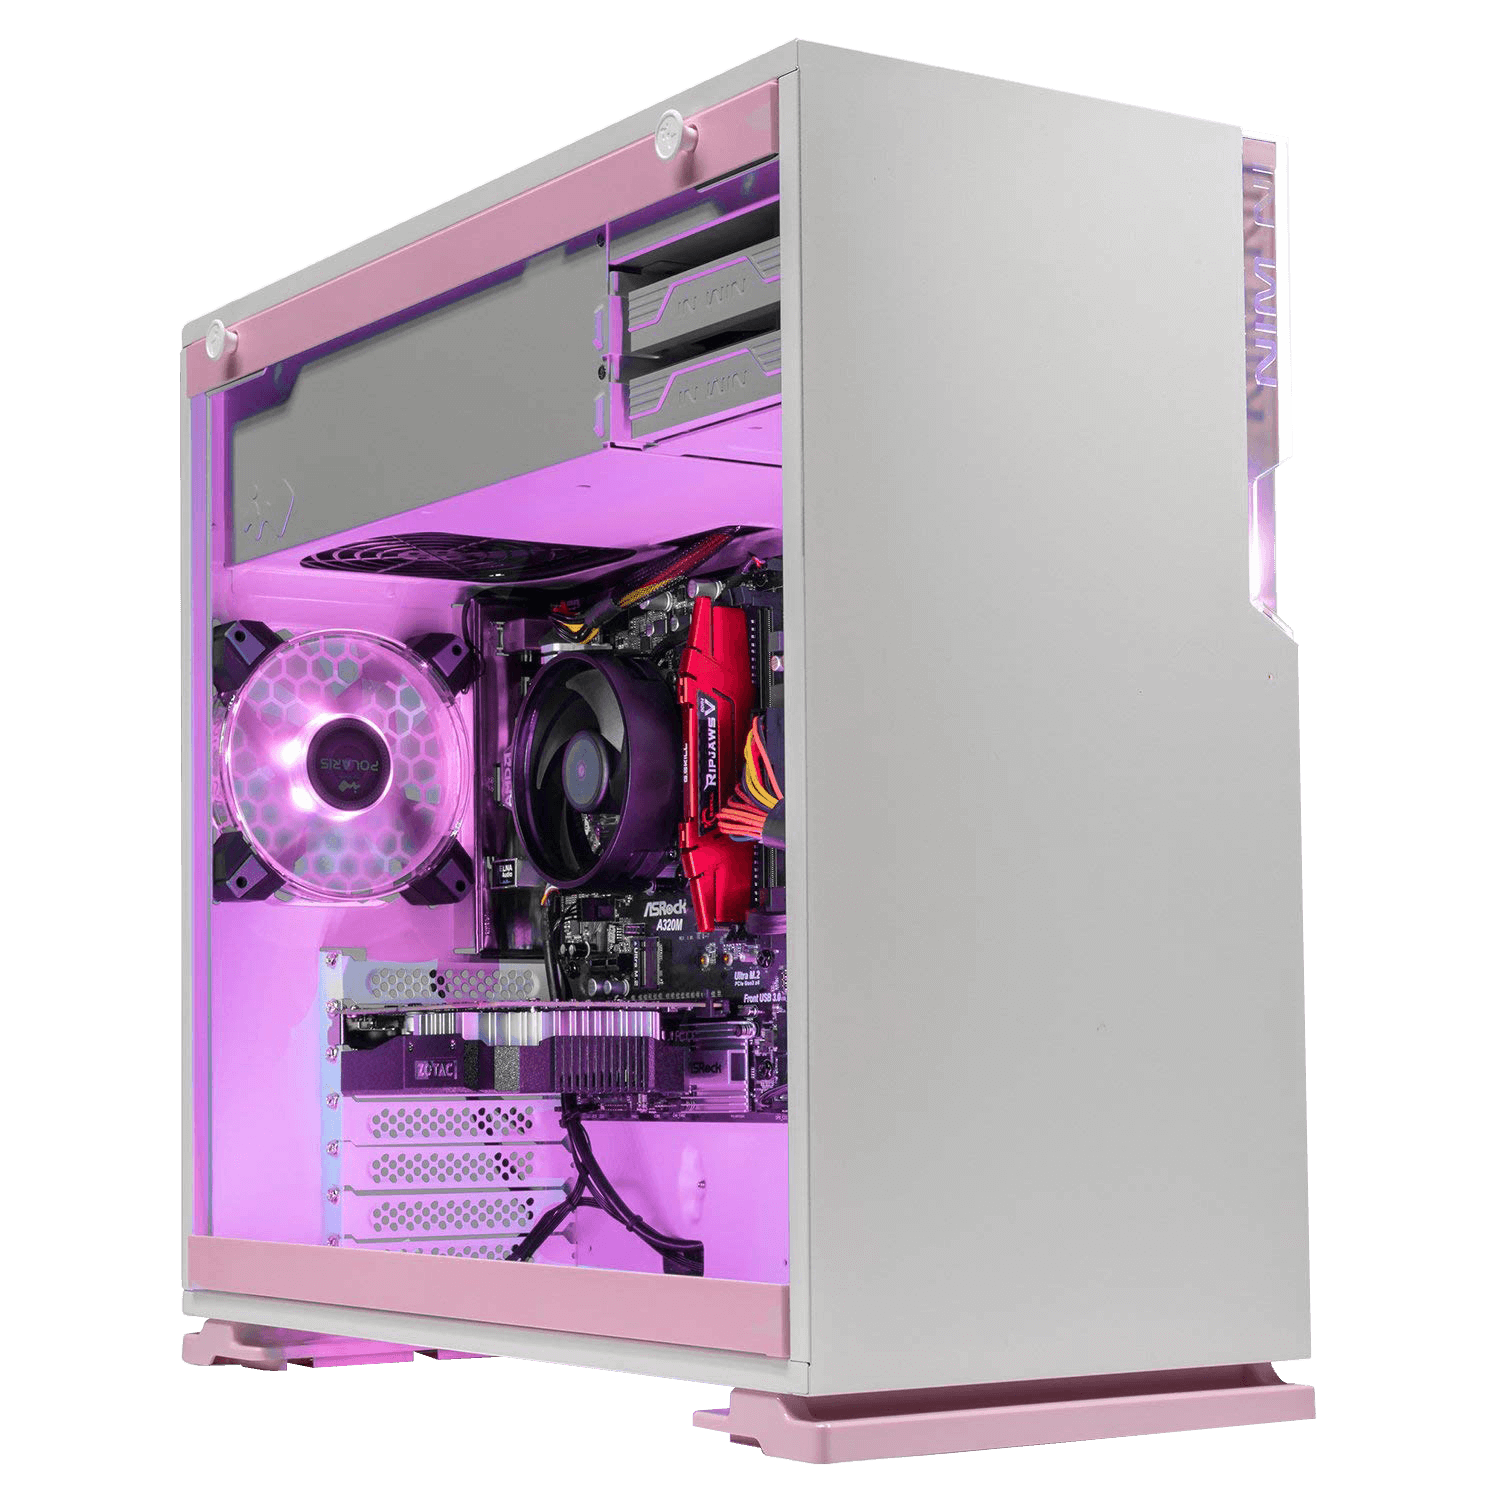 Venus AMD Ryzen 3 1200 4-Core 3.1 GHz (3.4 GHz Turbo)